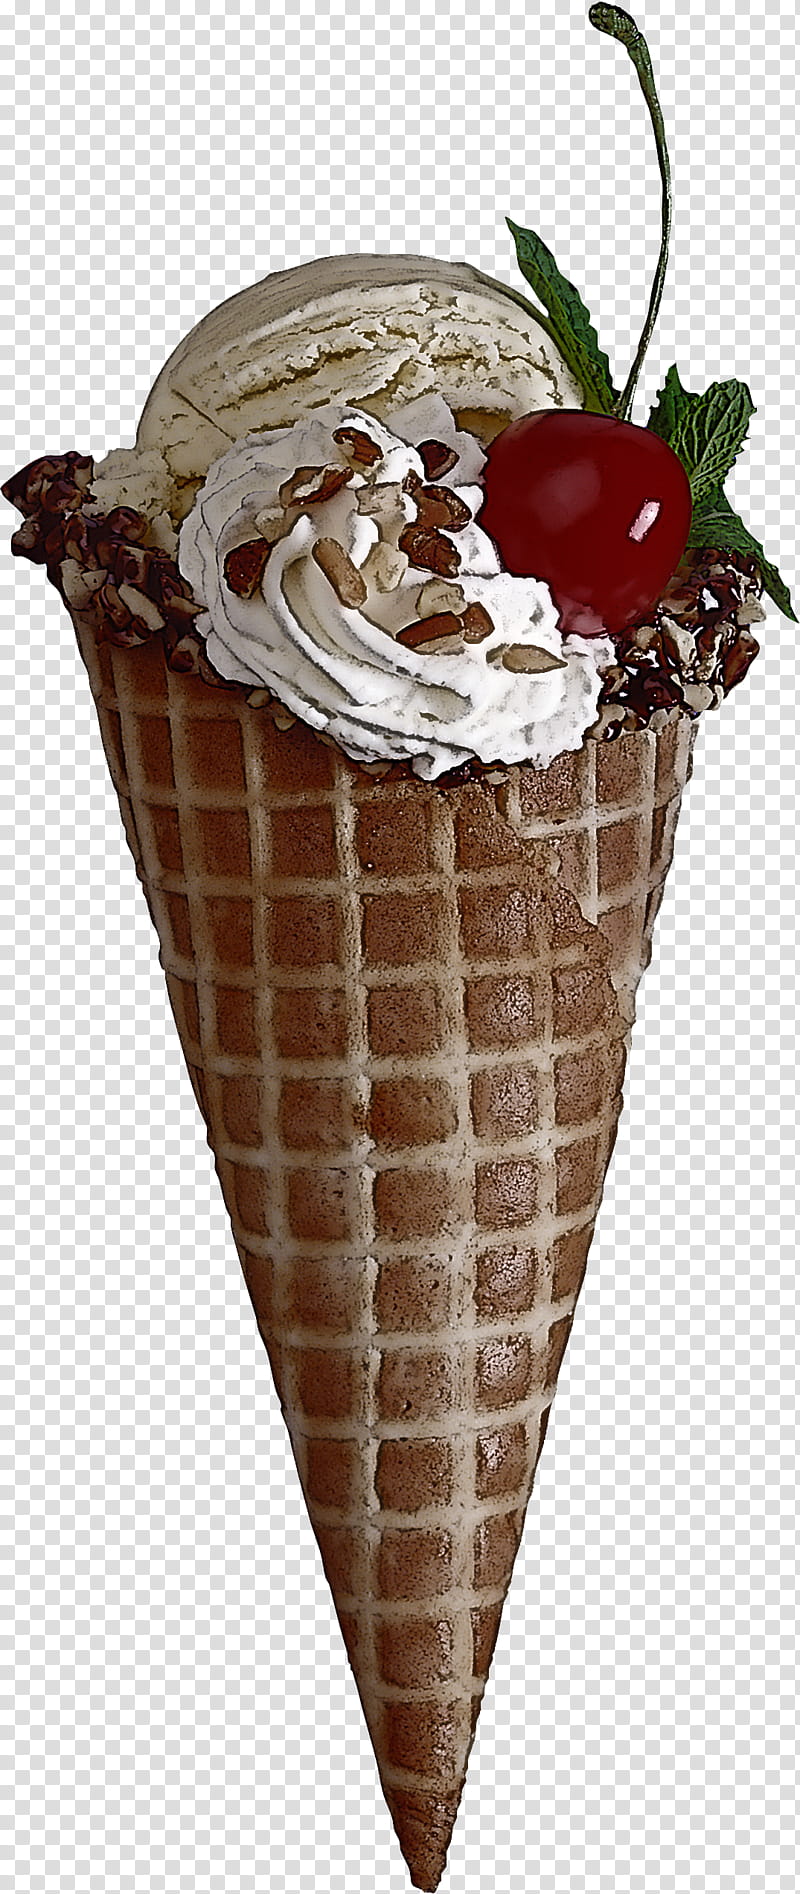 Ice cream, Ice Cream Cone, Knickerbocker Glory, Chocolate Ice Cream, Sundae, Gelato, Flavor transparent background PNG clipart